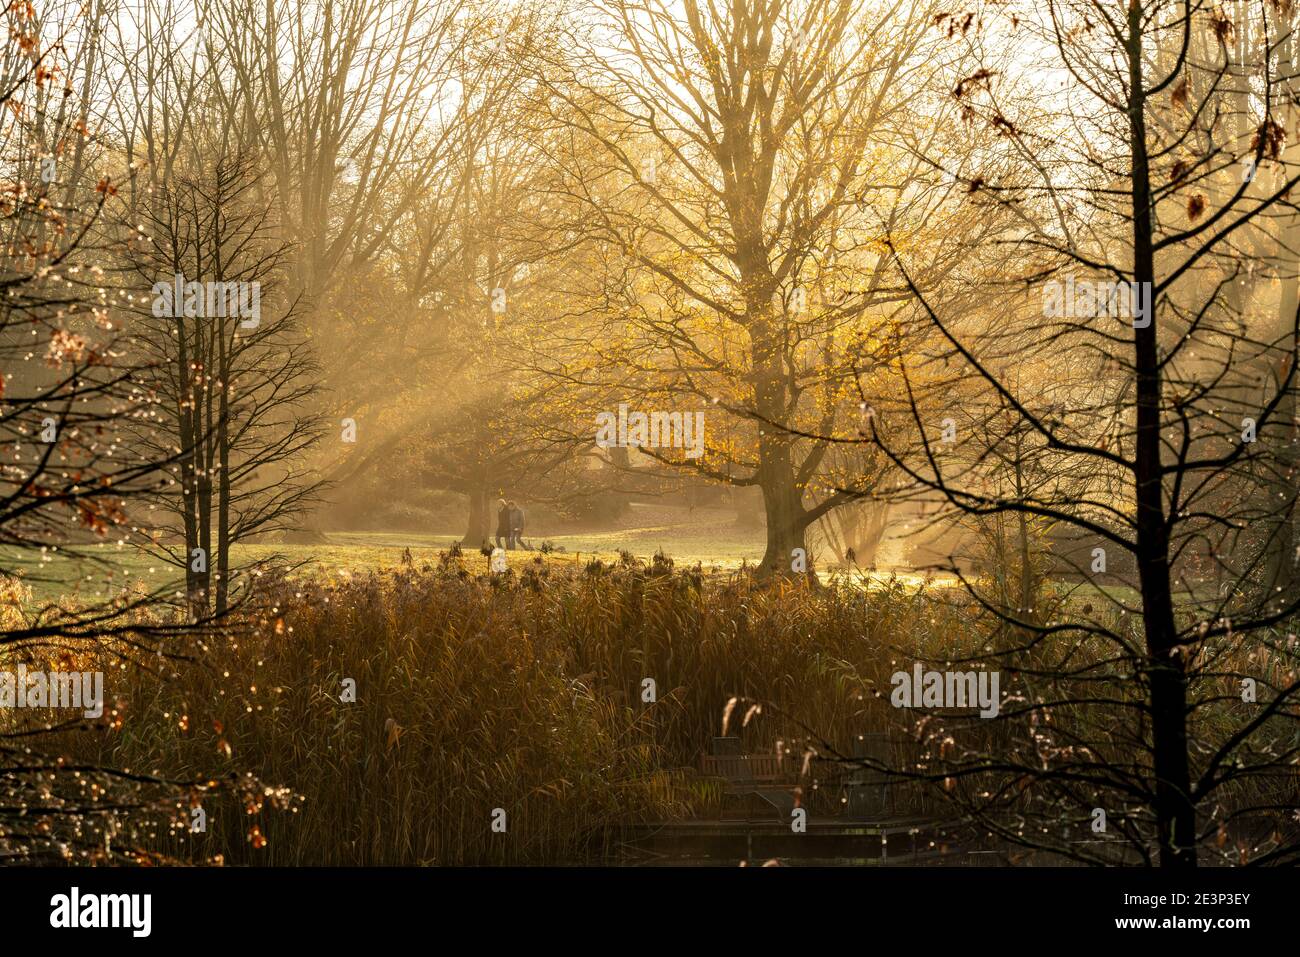 The Grugapark, Essen, botanical garden, park for leisure and recreation, autumn, Essen, NRW, Germany, Stock Photo